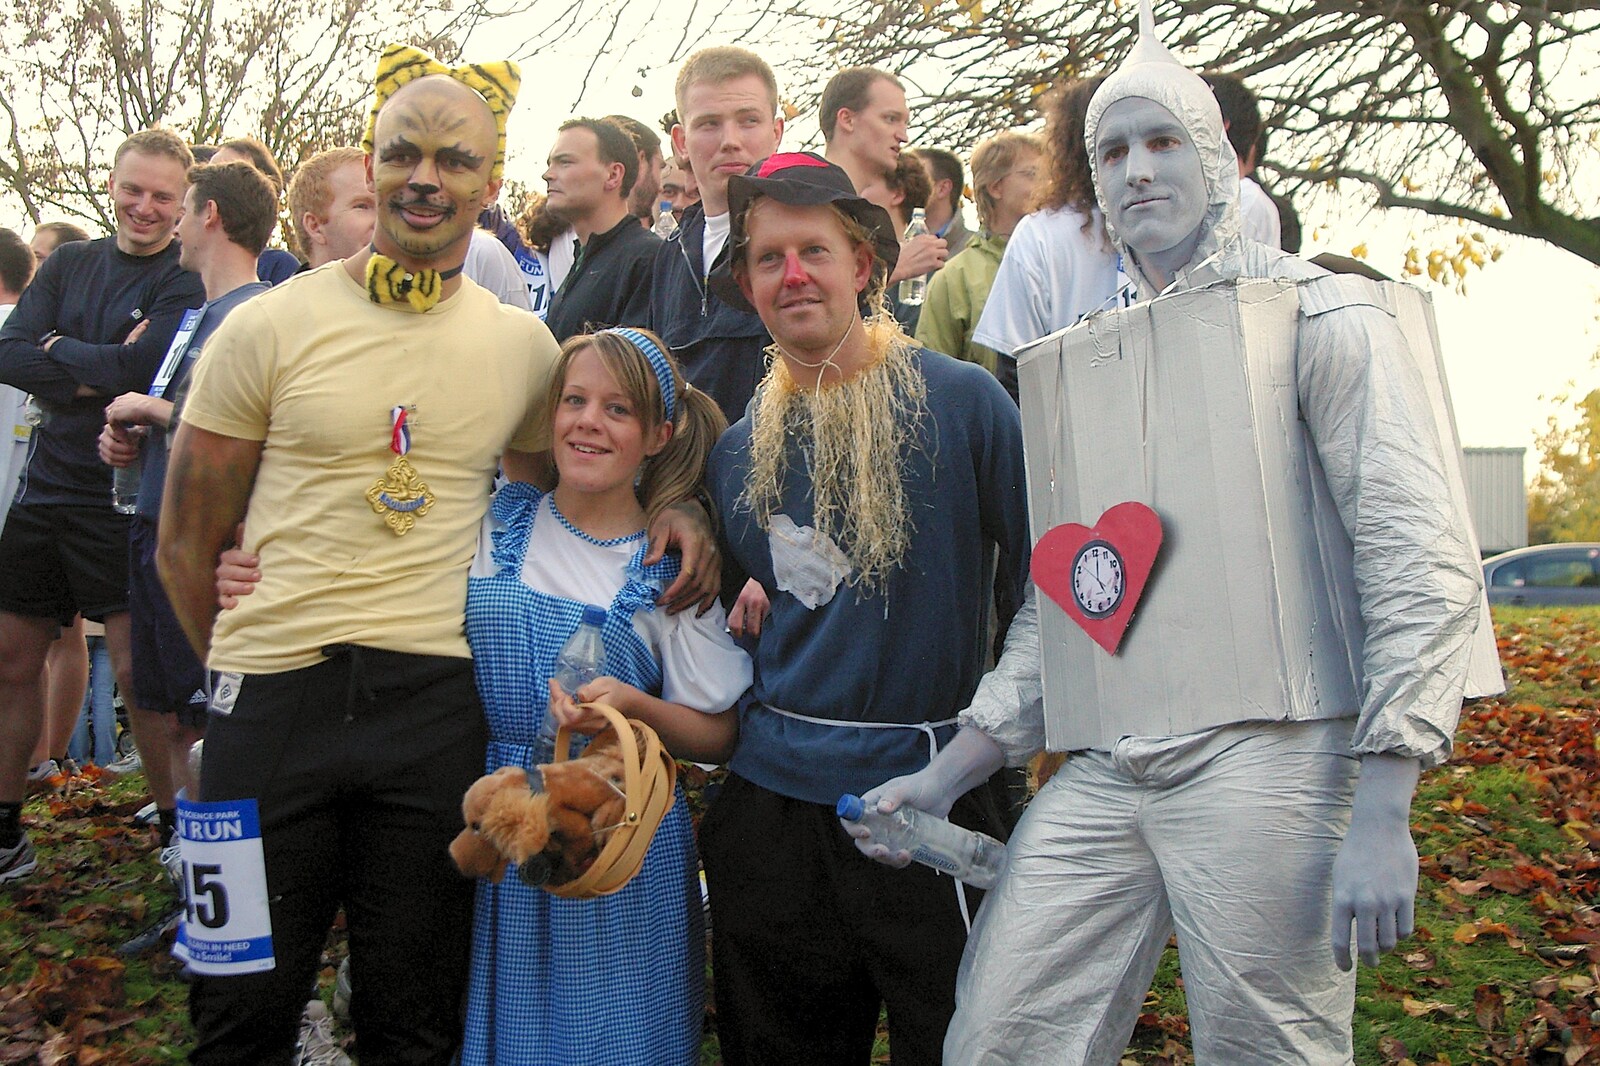 The Wizard of Oz team again from Cambridge Science Park "Children in Need" Fun Run, Milton Road, Cambridge - 17th November 2006